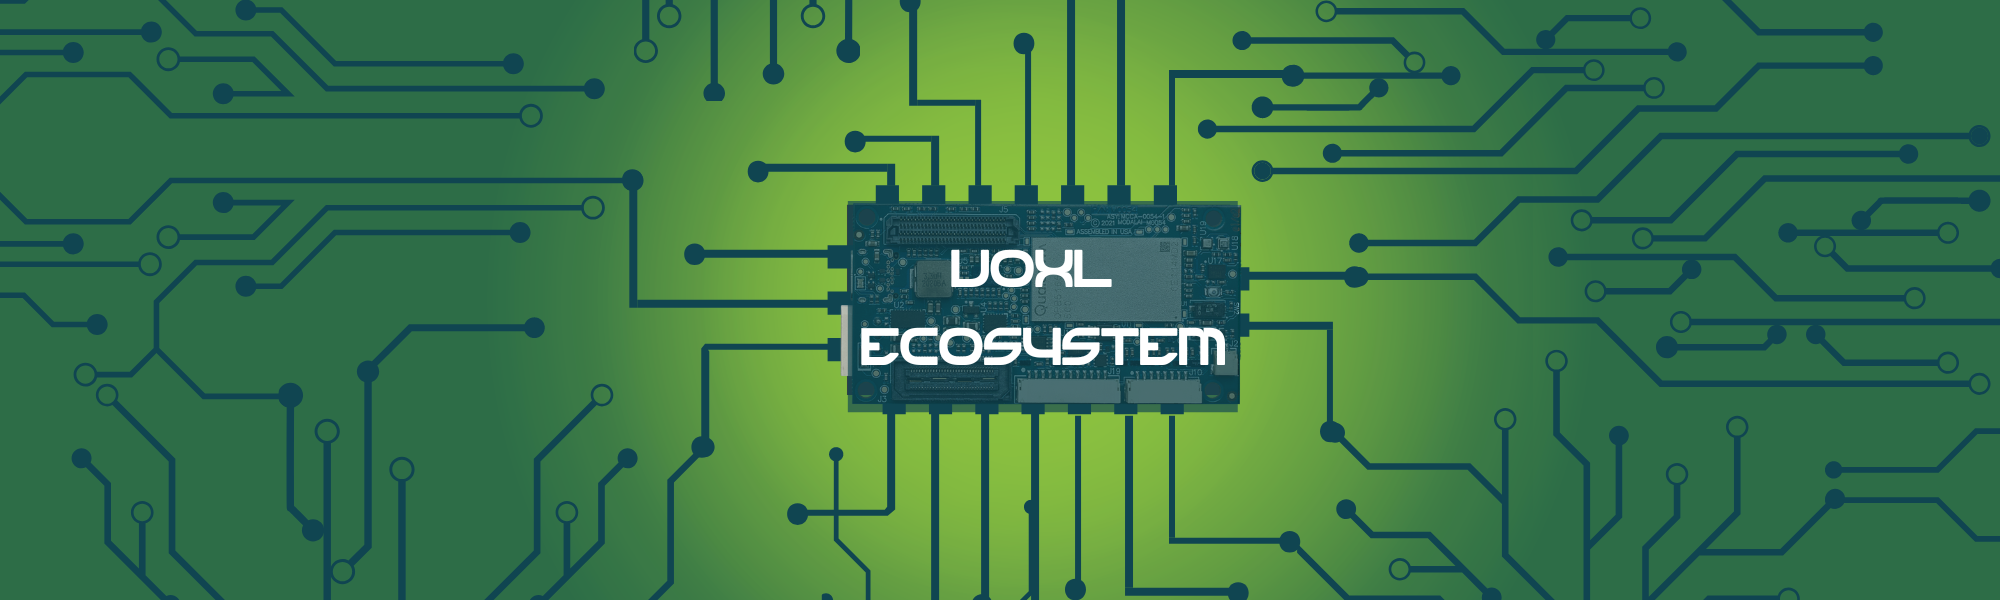 VOXL Ecosystem